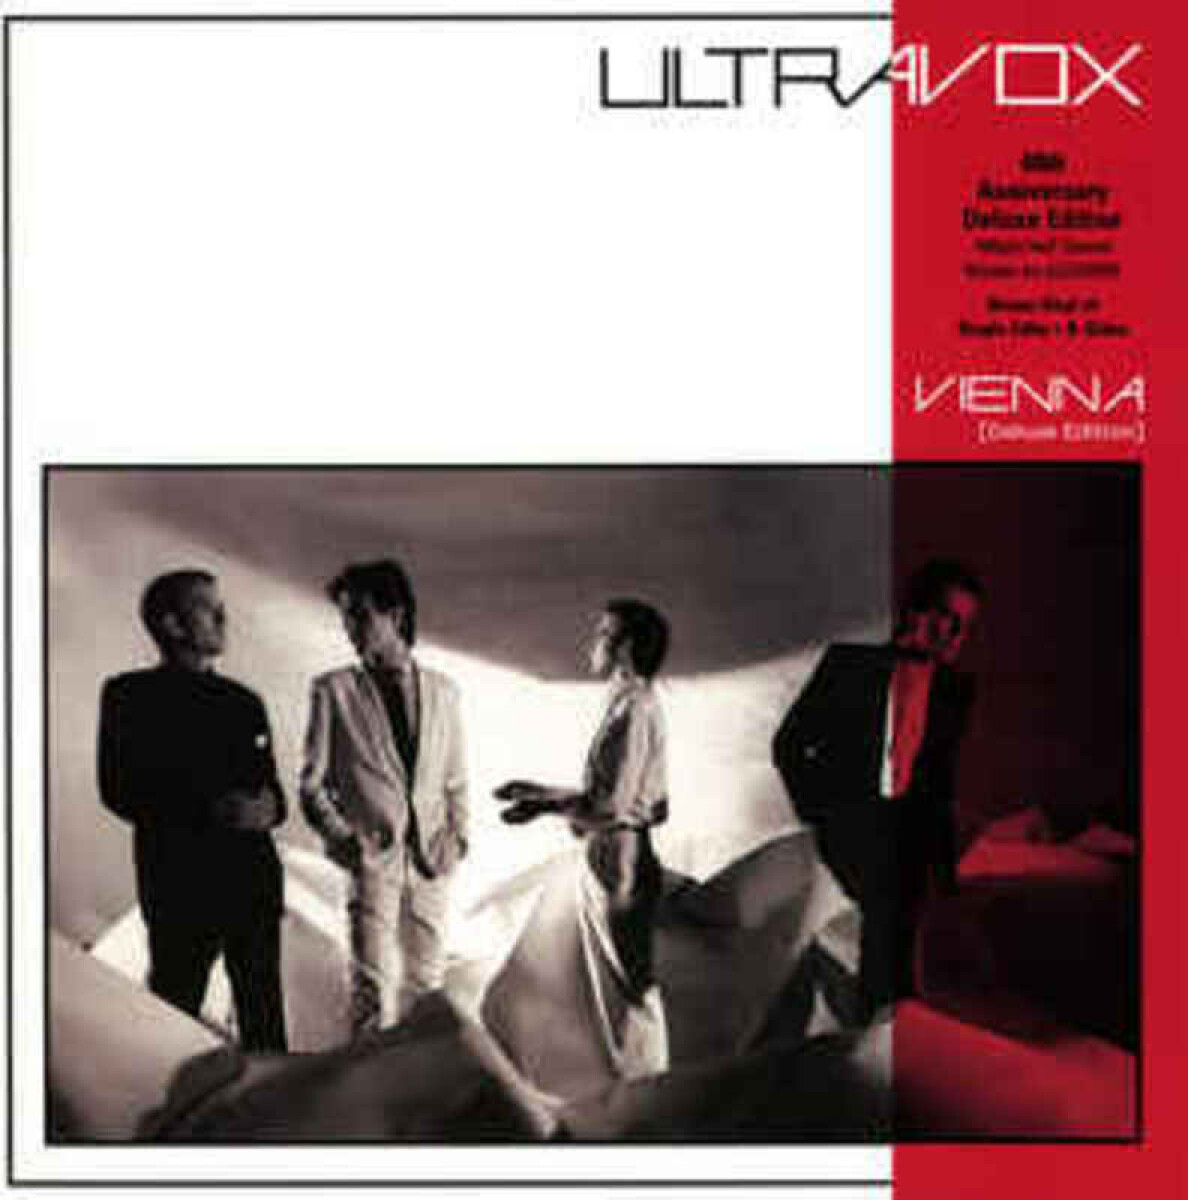 Ultravox - Vienna (deluxe 40th Anniversary Edit) 